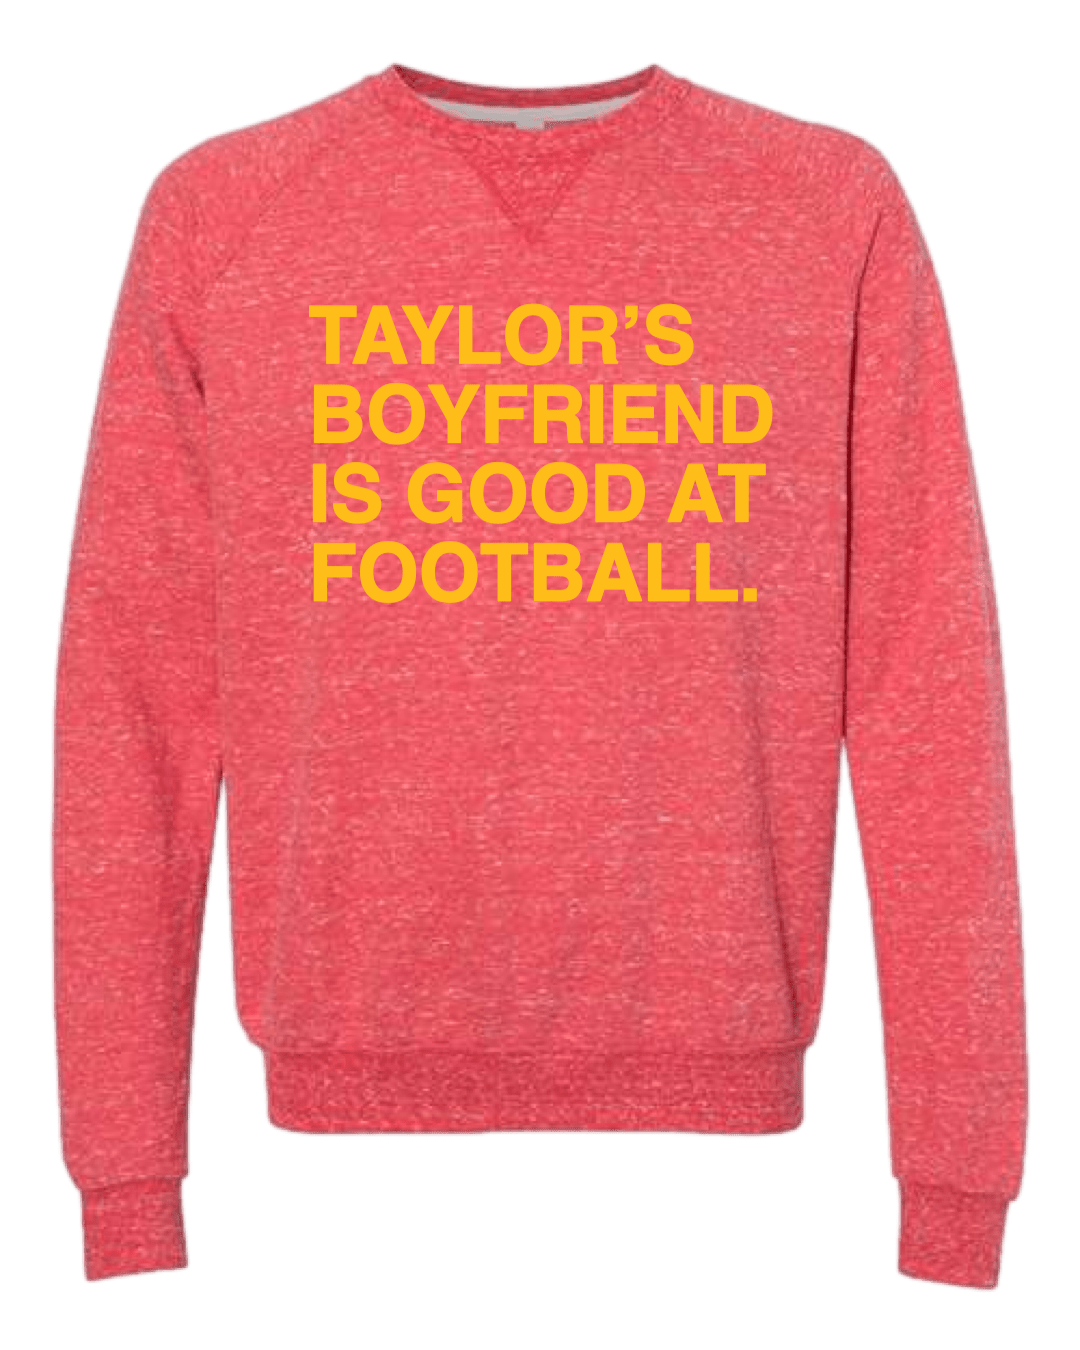 TAYLOR'S BOYFRIEND IS GOOD AT FOOTBALL. (CREW SWEATSHIRT) - OBVIOUS SHIRTS